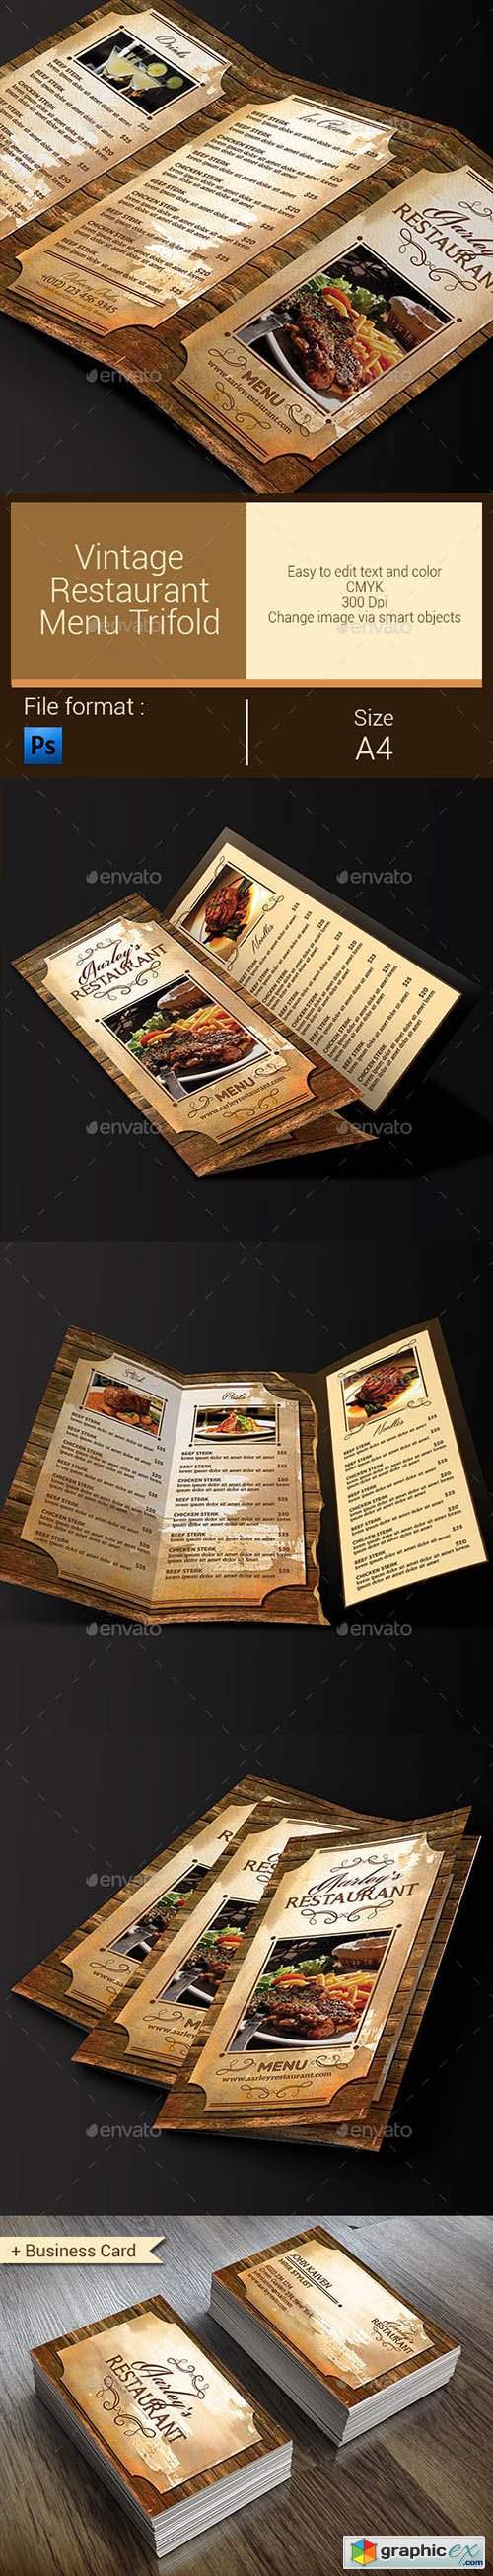 Vintage Restaurant Menu Trifold + Business Card